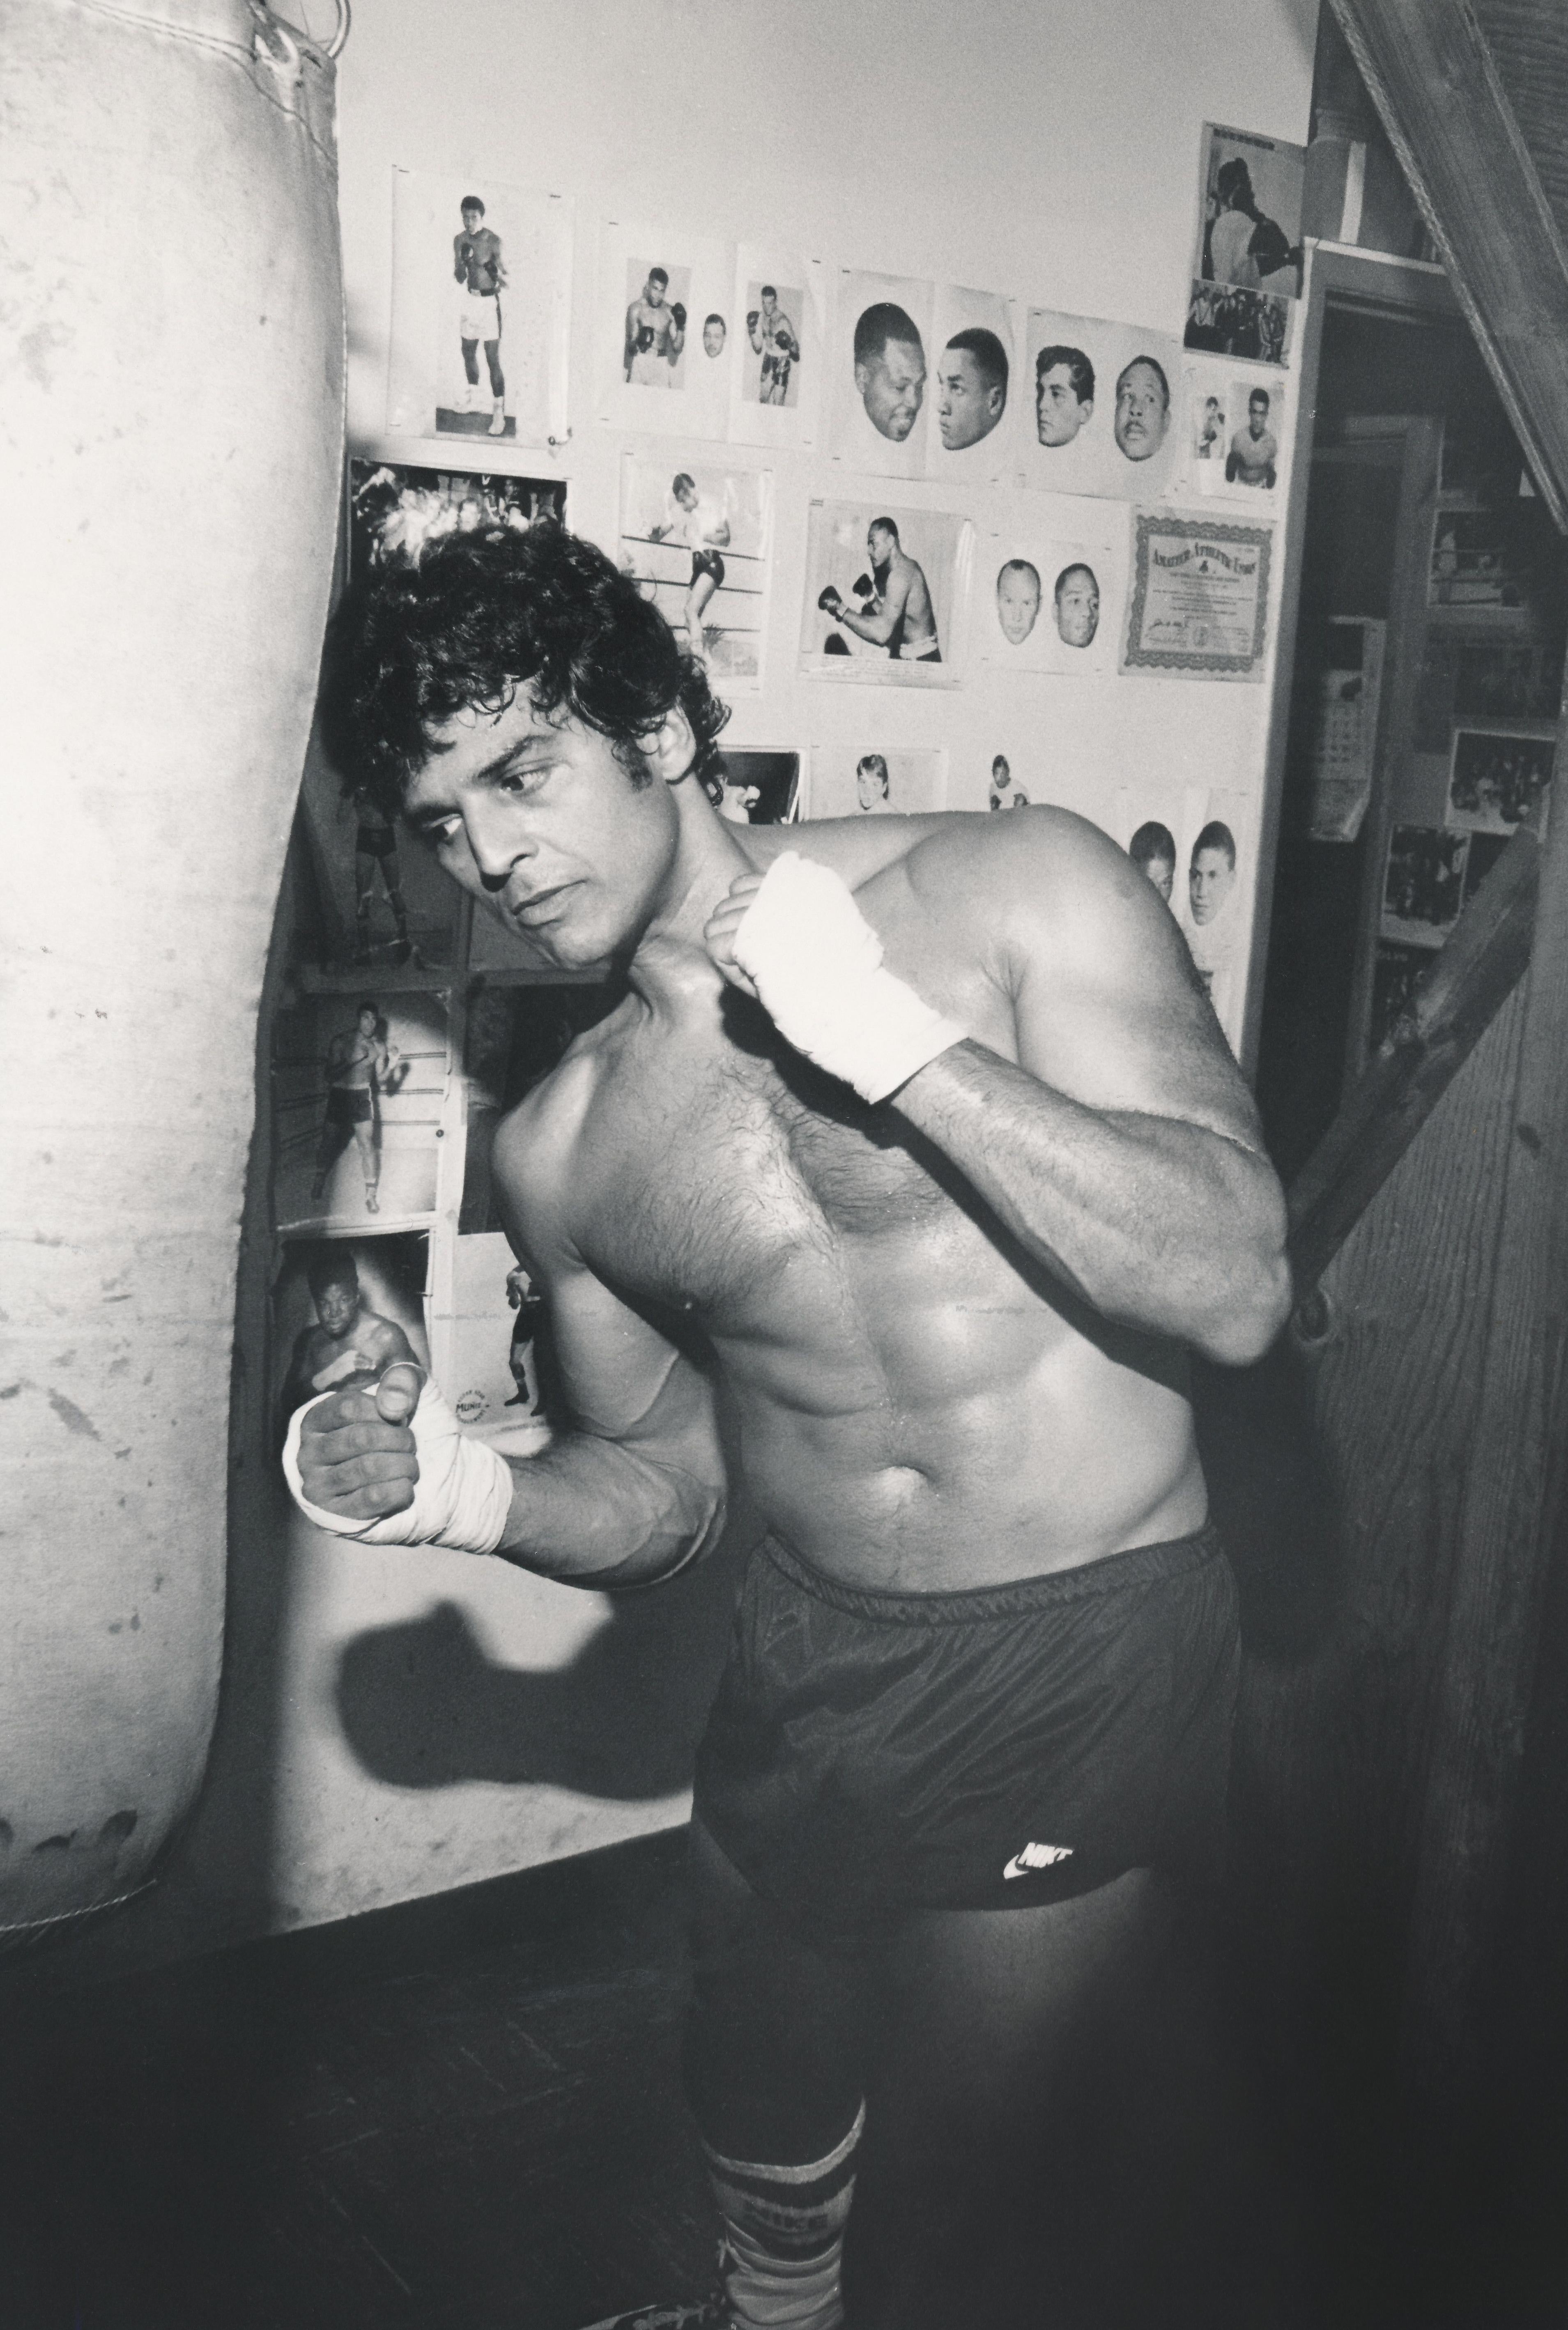 Unknown Portrait Photograph - Erik Estrada of "CHiPs" Boxing Globe Photos Fine Art Print